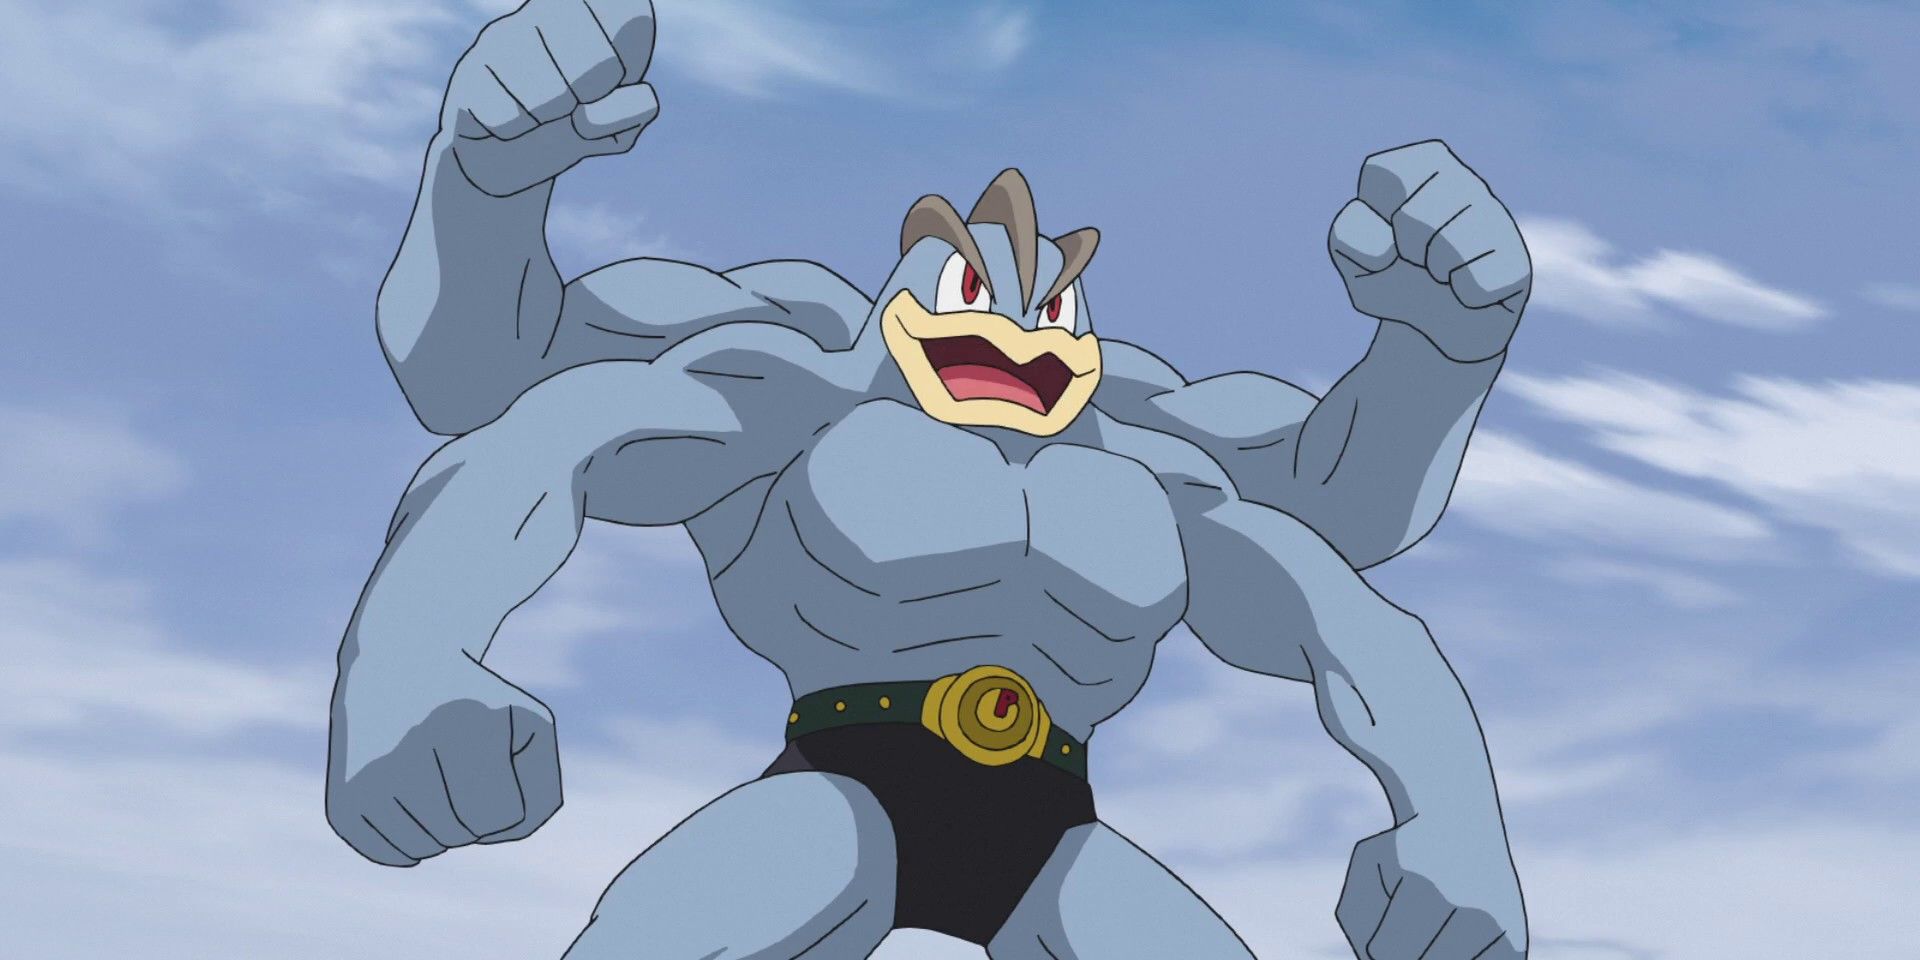 Machamp flexes his muscles in Pokemon